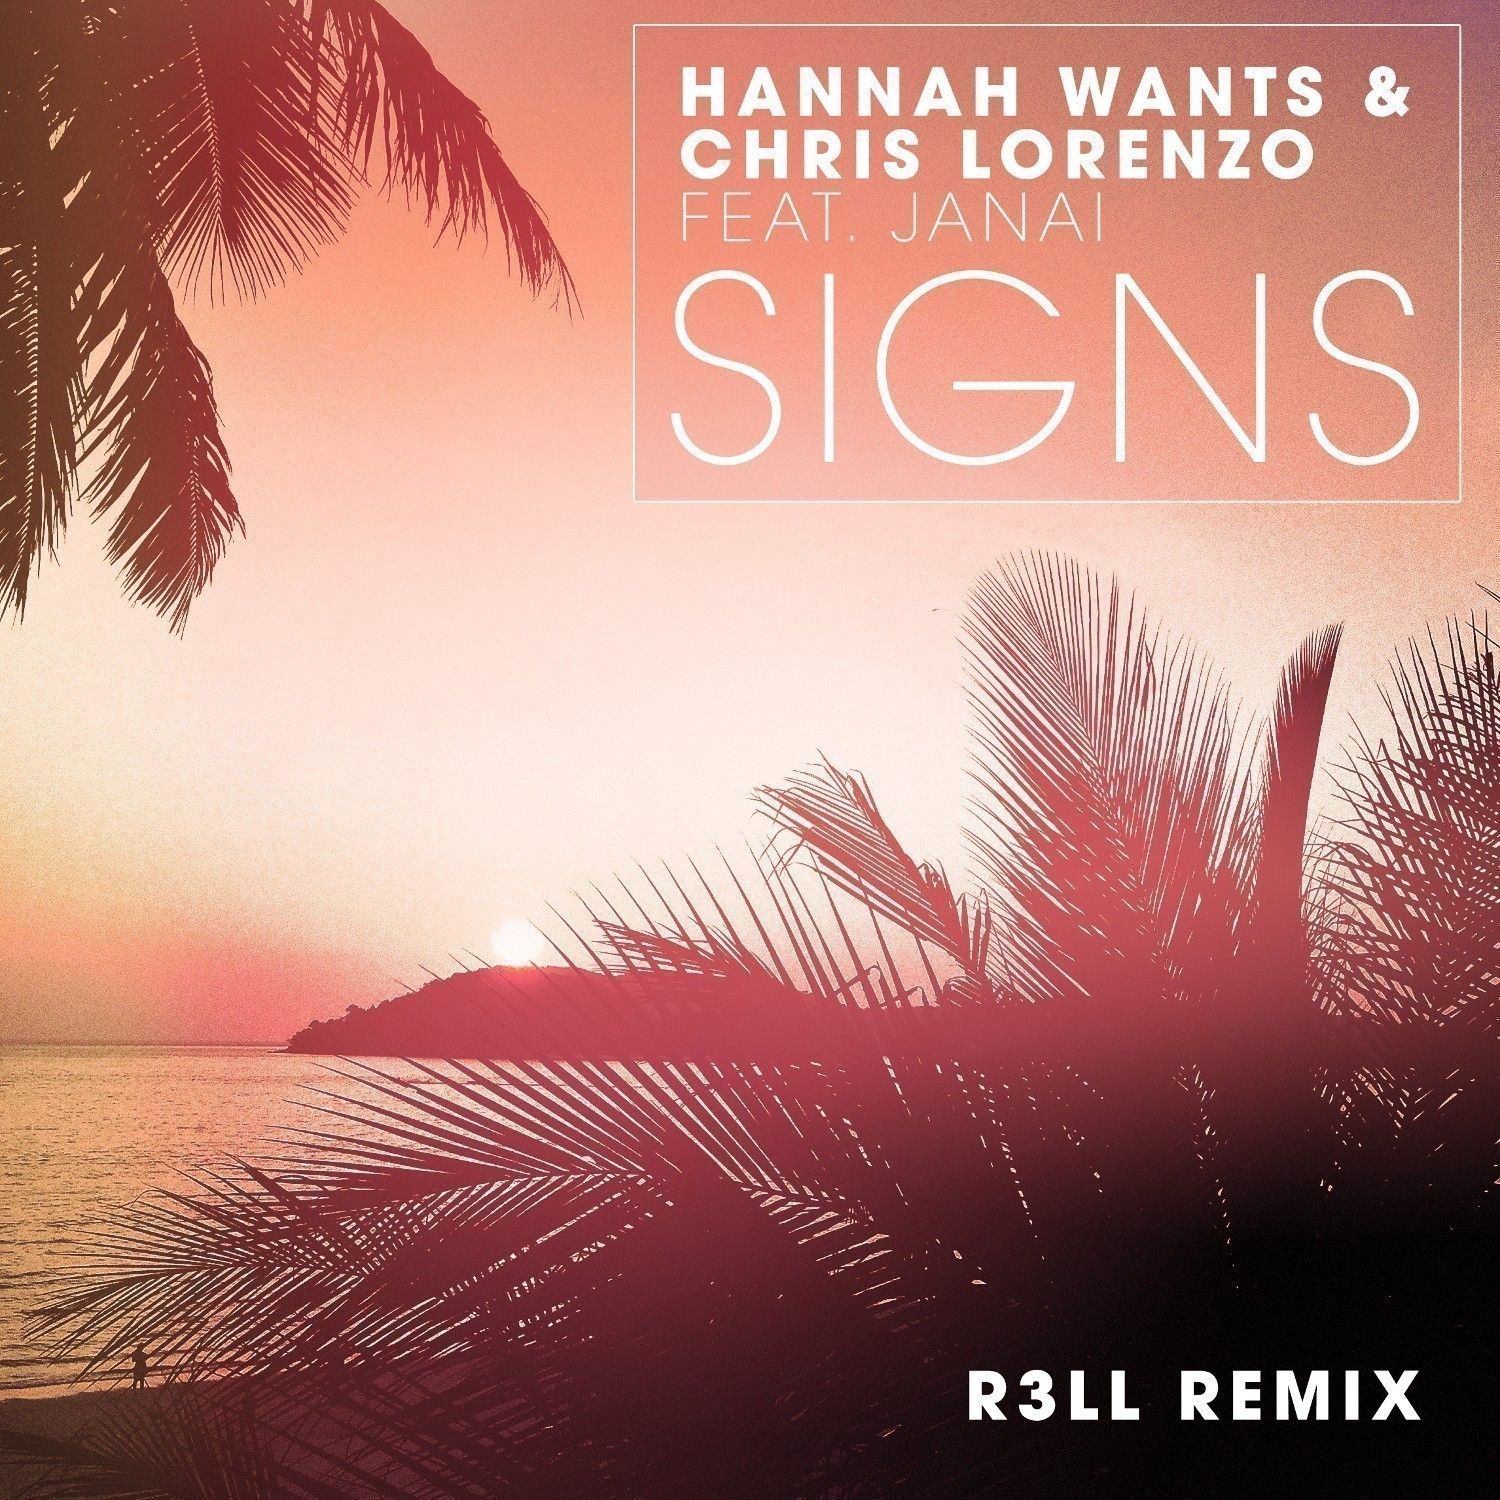 hannah-wants-chris-lorenzo-feat.janai-signs-r3ll-remix.jpg